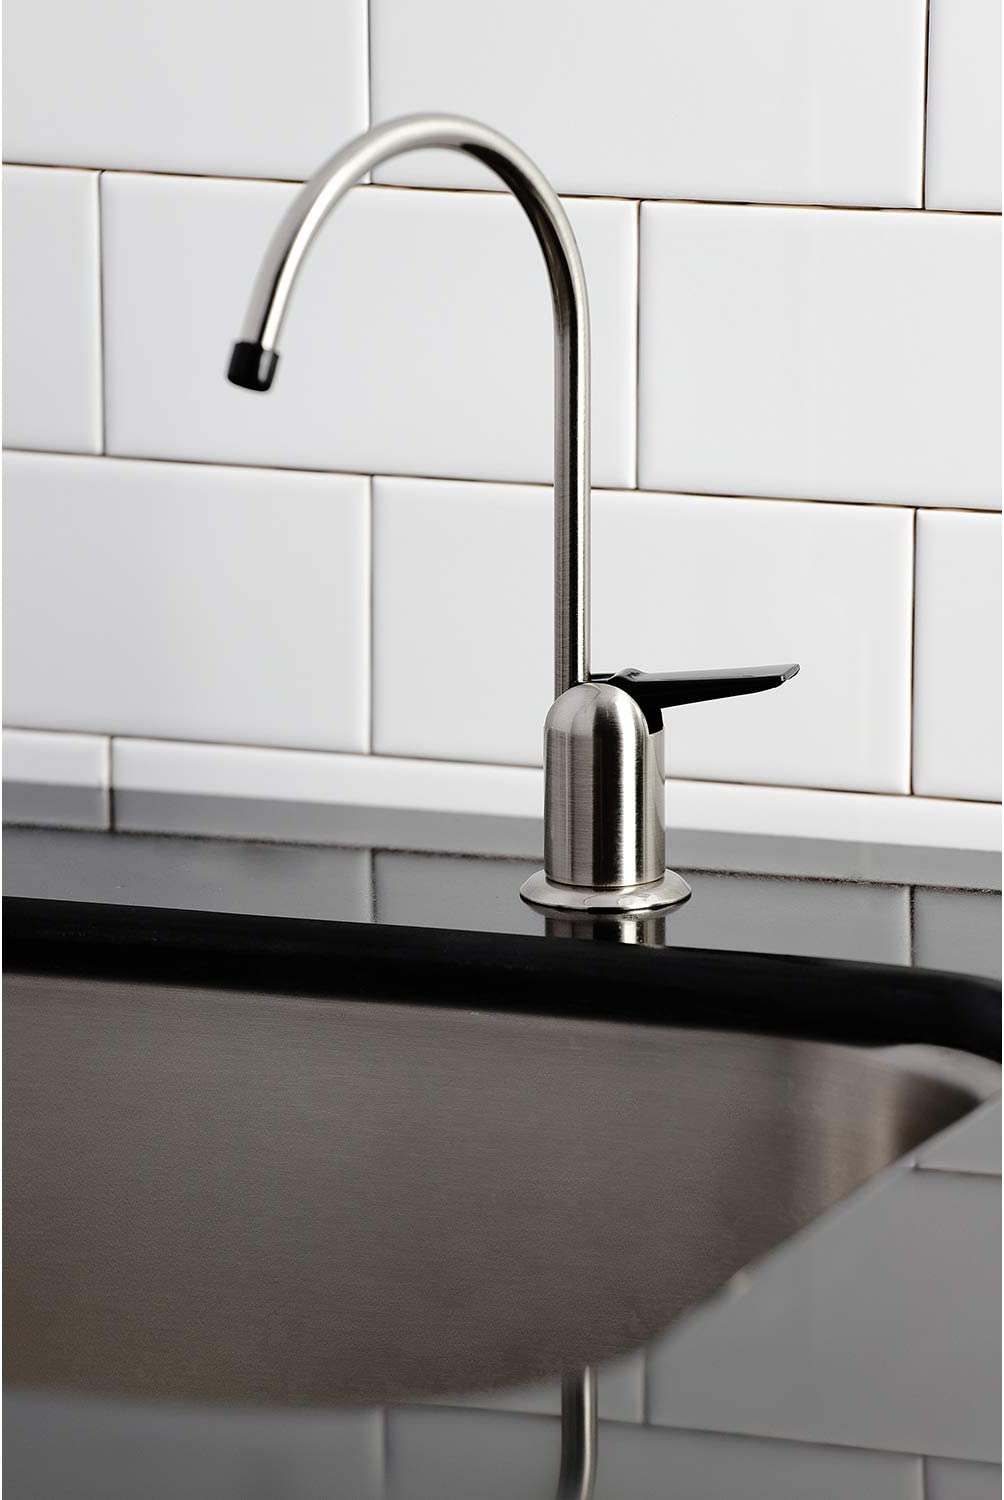 Kingston Brass K6194 Americana Water Filtration Faucet, Black Stainless